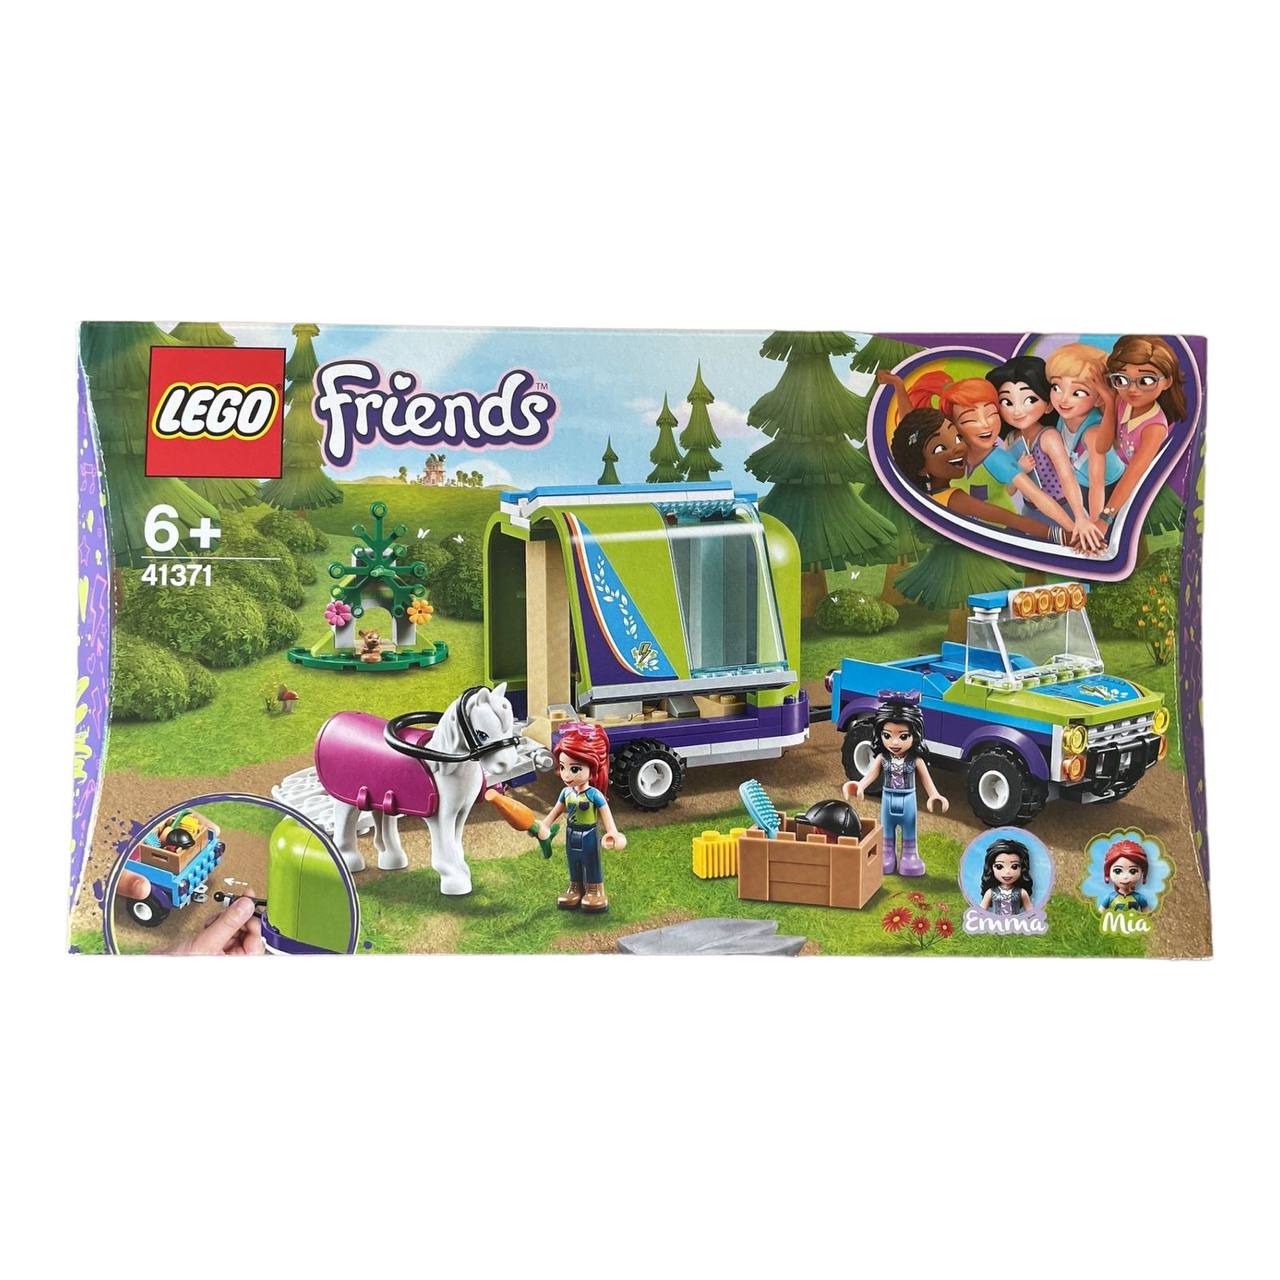 Lego ® Friends Mia's horse trailer - 41371